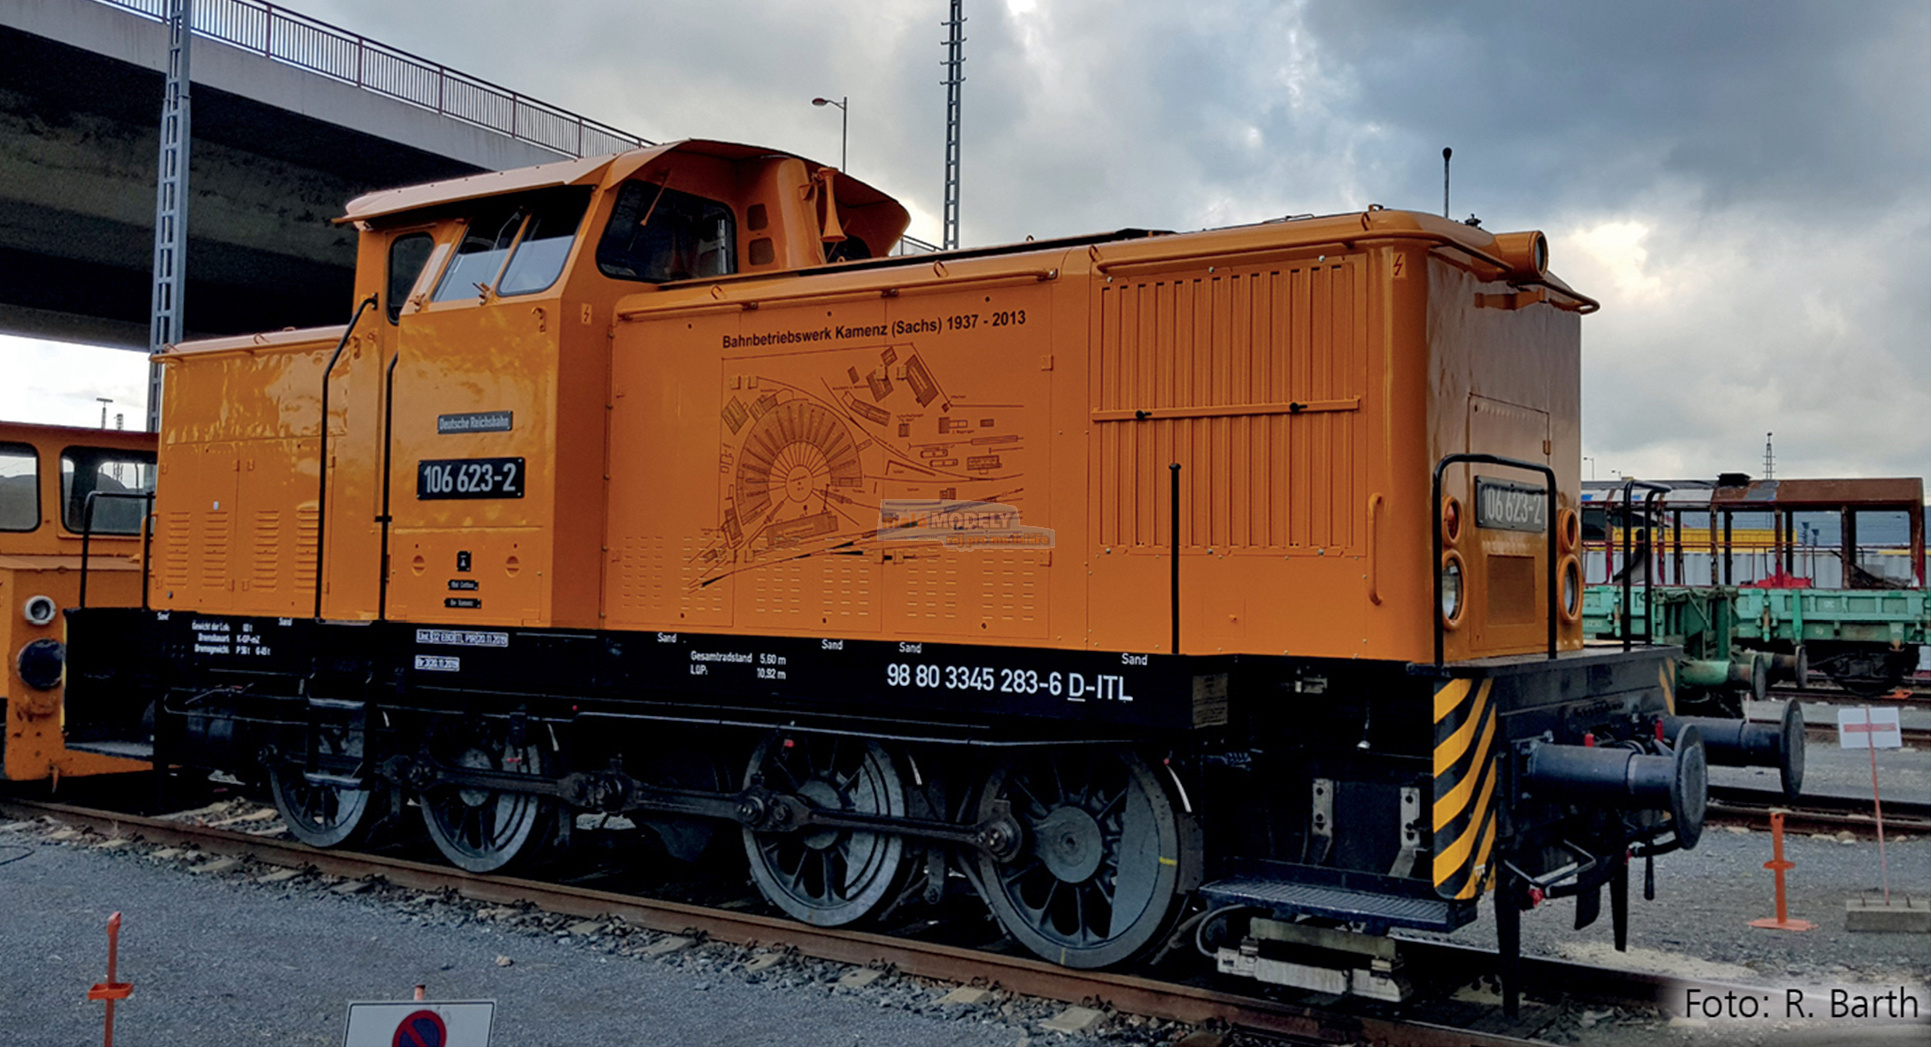 Dieselová lokomotiva 106 623-2 s potiskem motivu „Bahnbetriebswerk Kamenz“ - (31.03.2021)